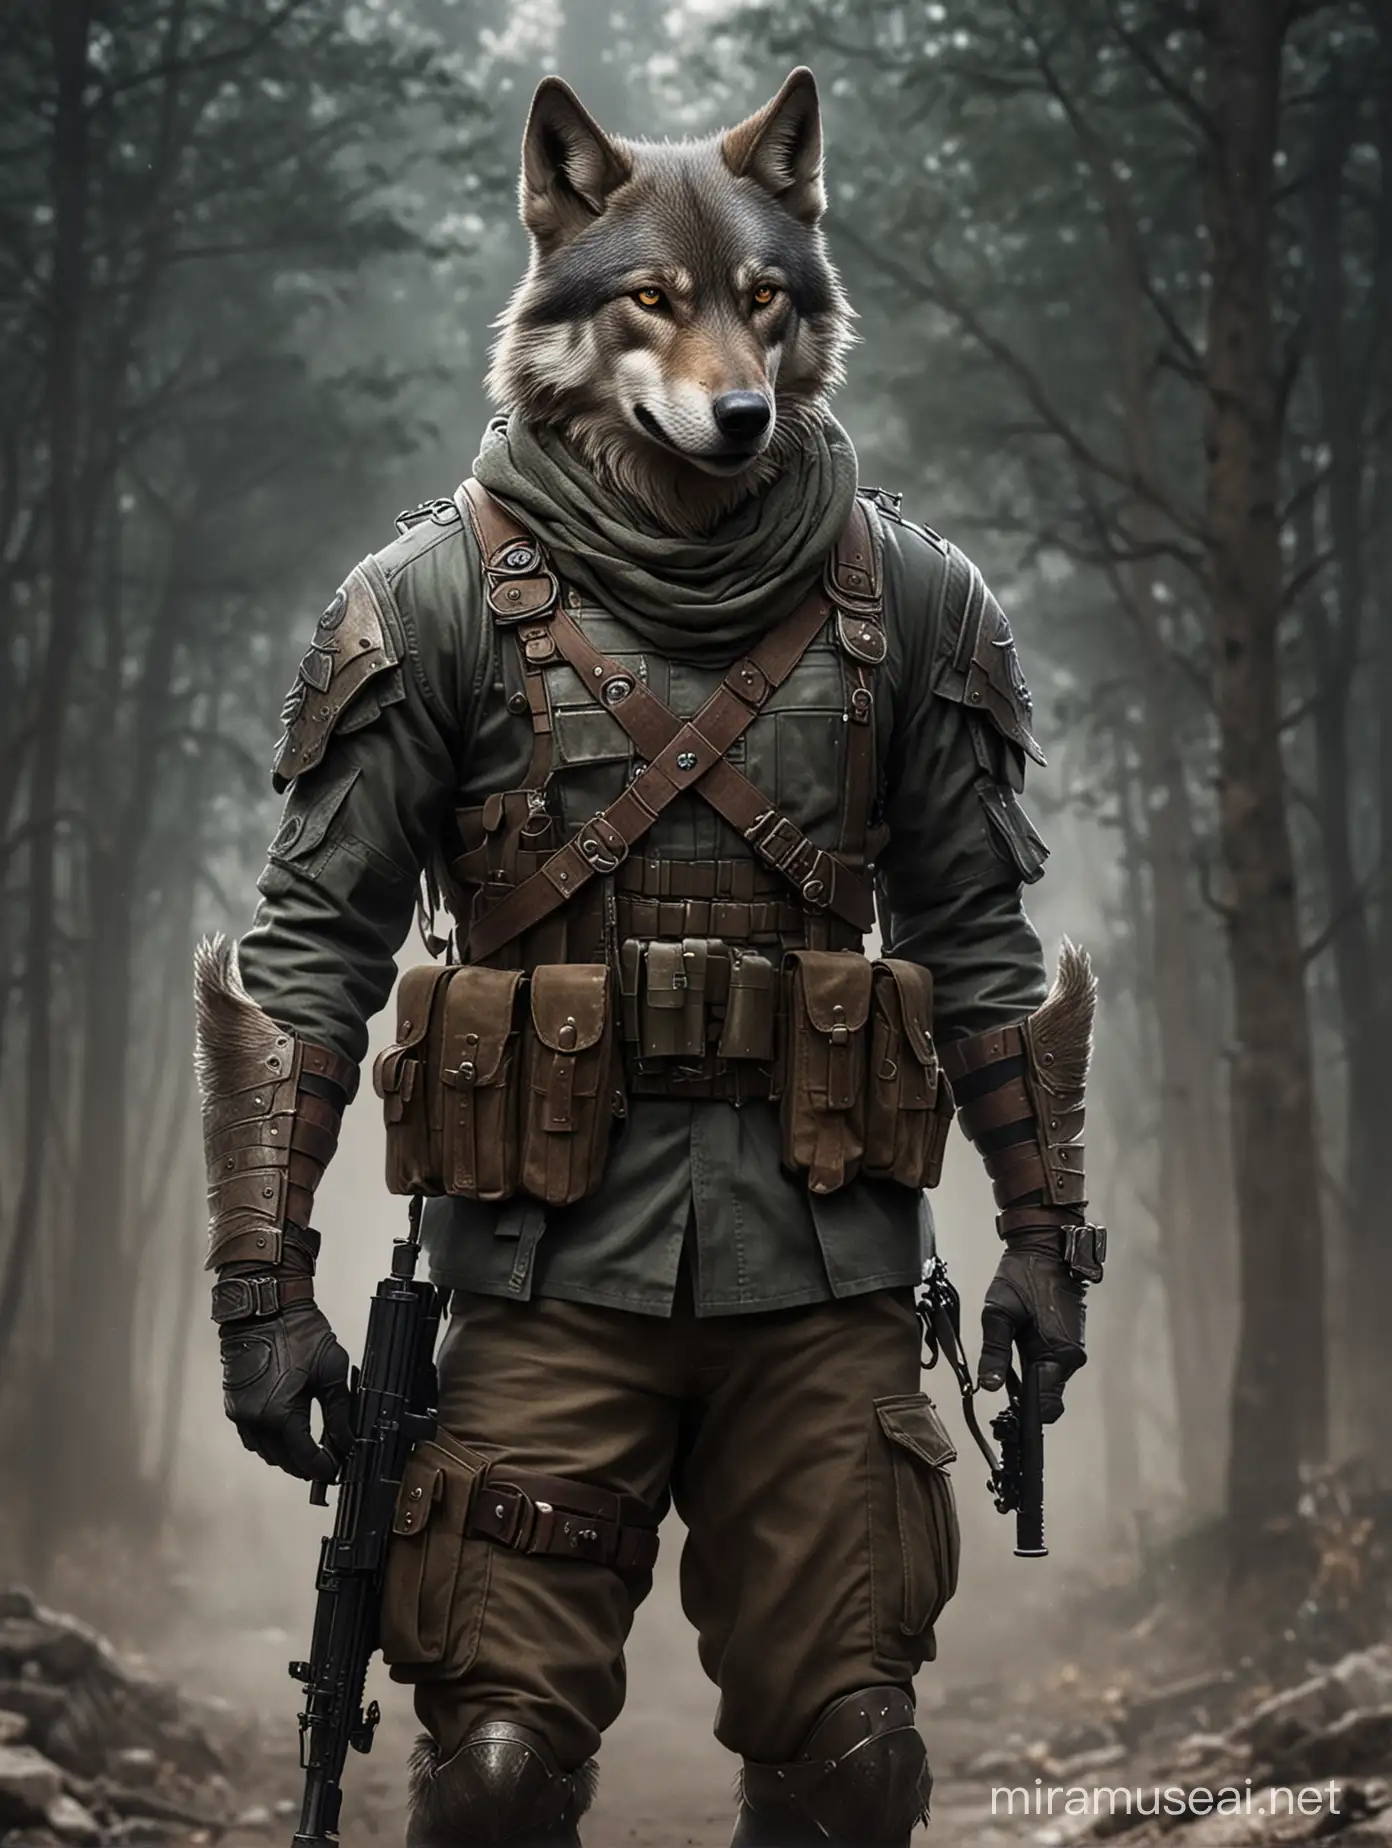 Majestic Soldier Wolf in Nighttime Wilderness